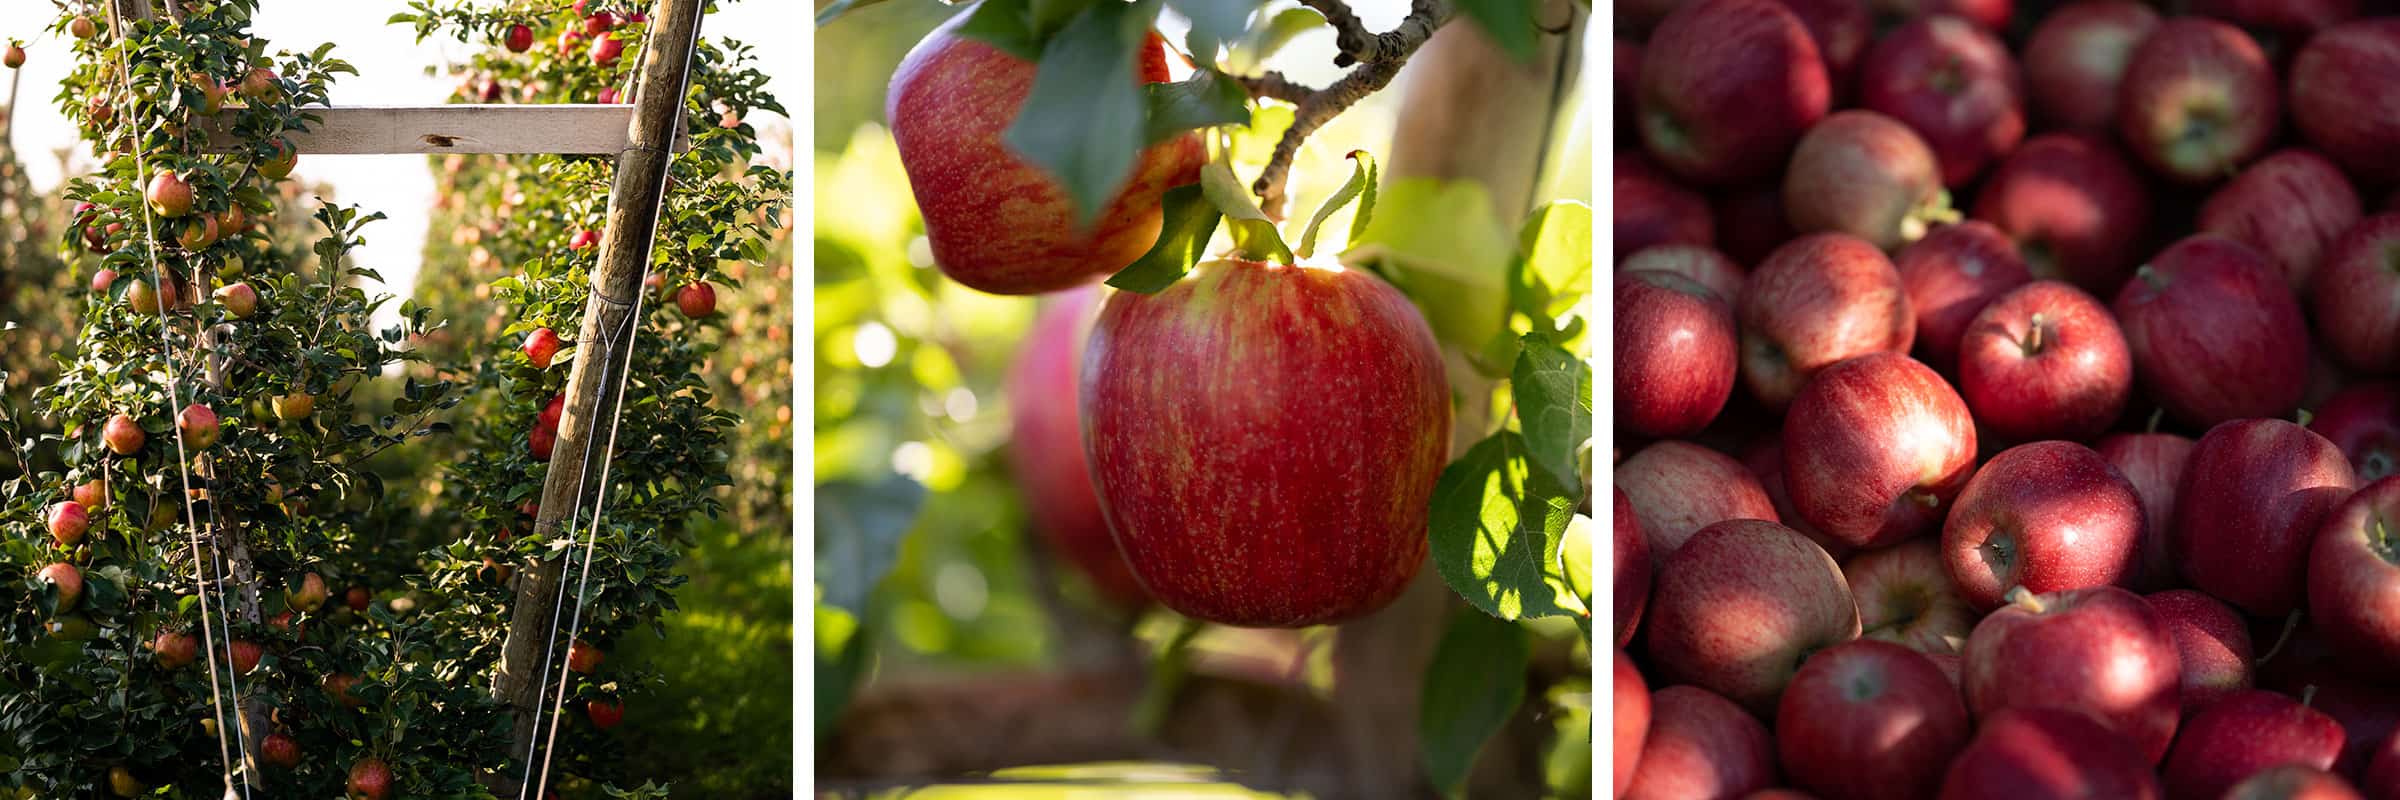 Rainier Gallery Apples - Rainier Fruit